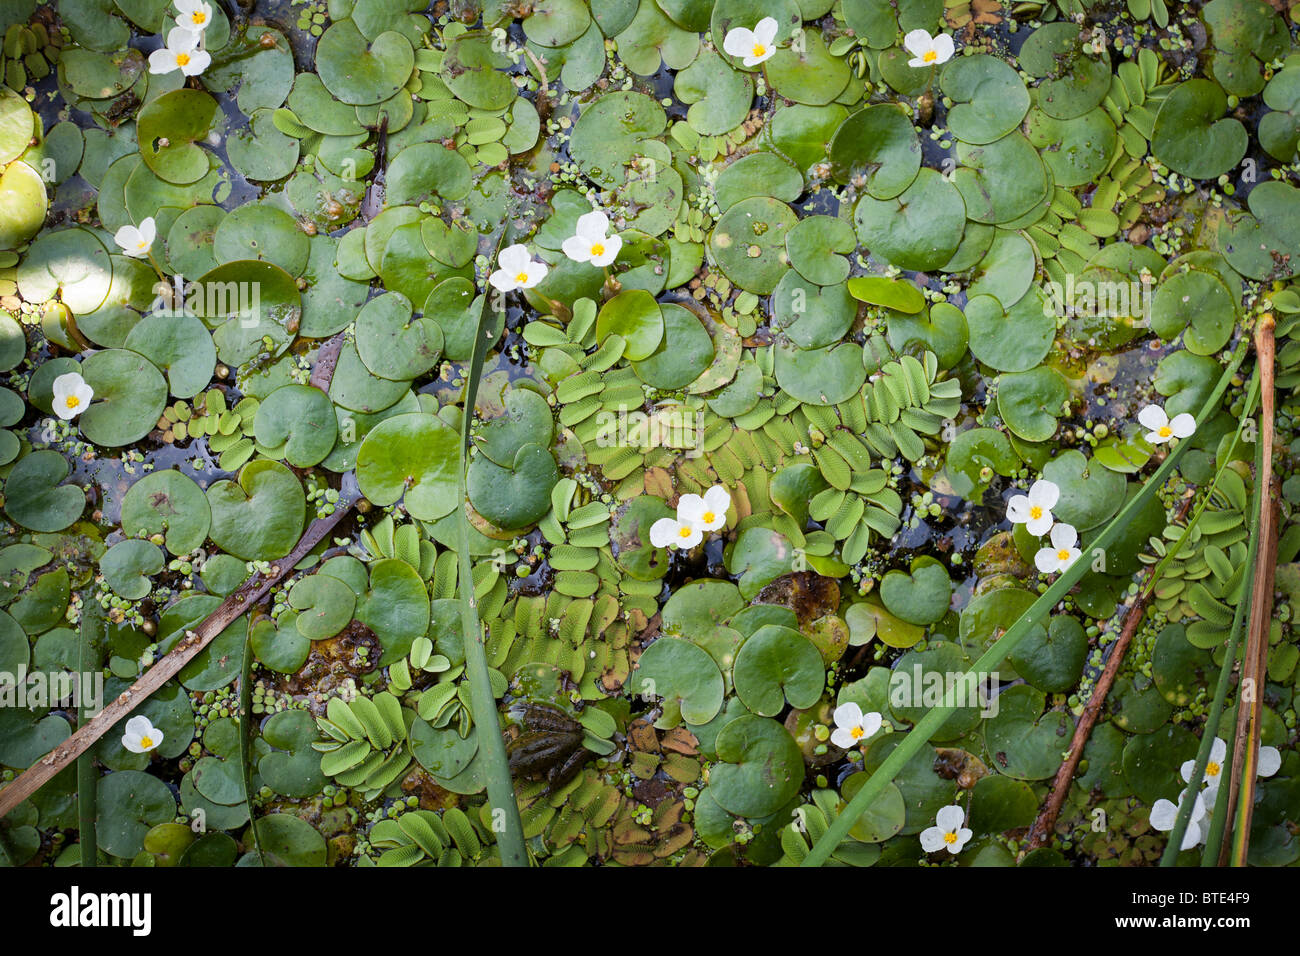 Plantas de lirio de agua fotografías e imágenes de alta resolución - Alamy